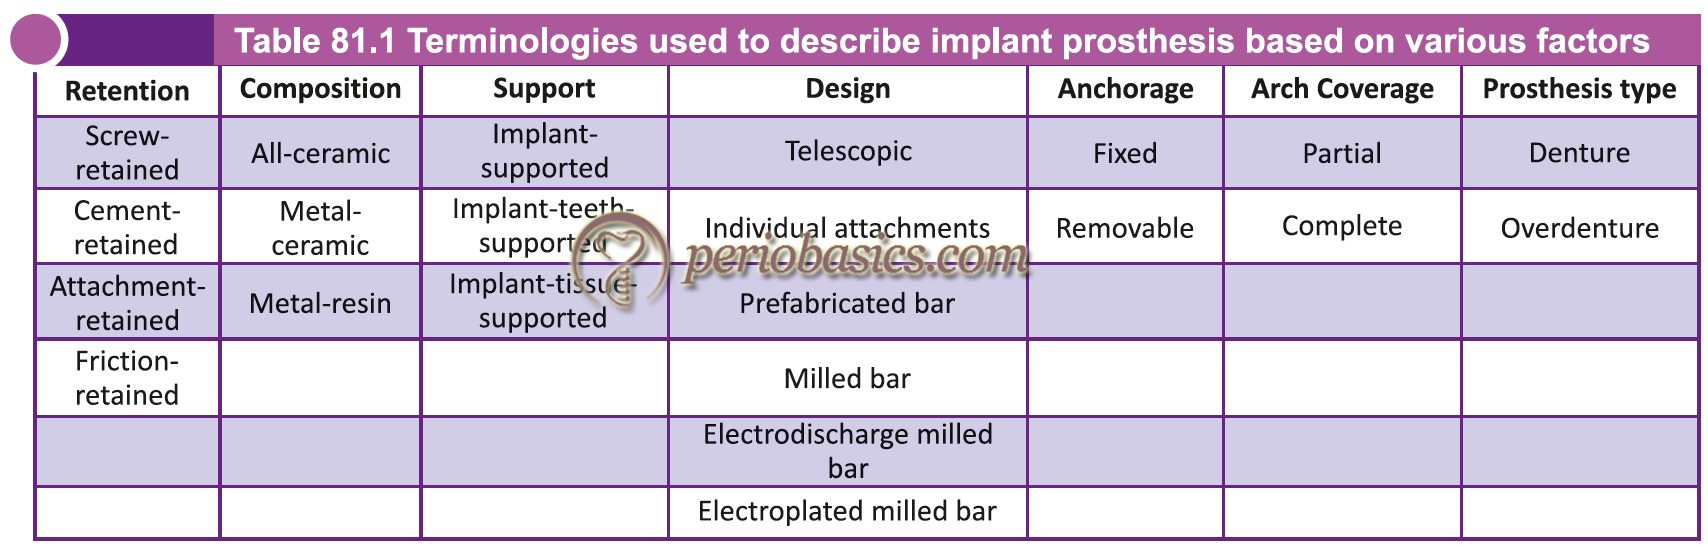 Terminologies used to describe implant prosthesis